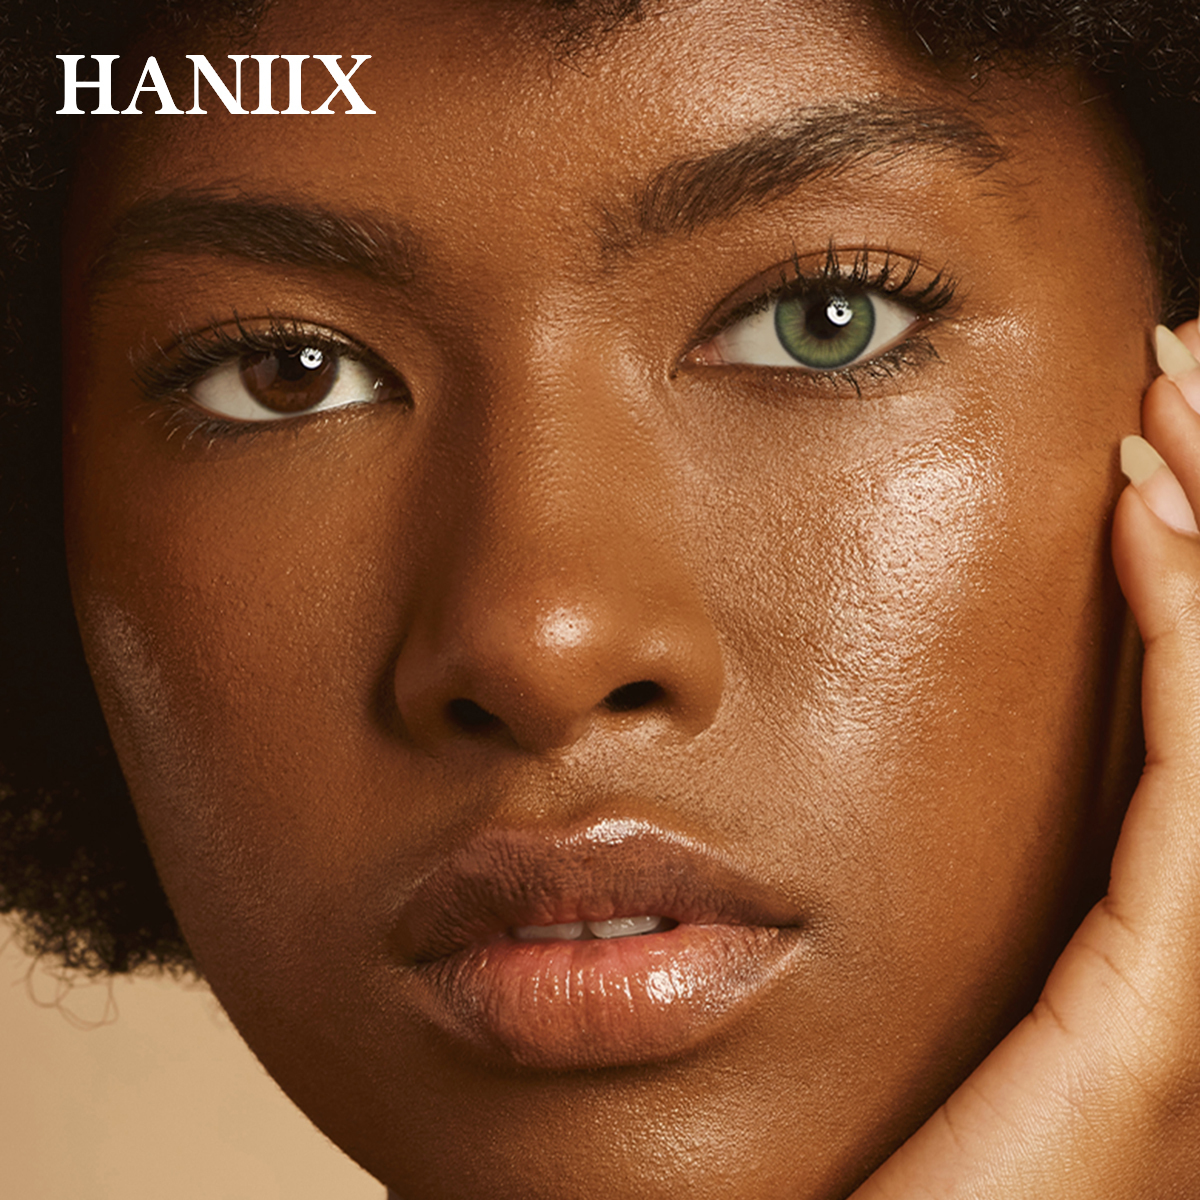 Seattle Green - Yearly, 2 lenses - HANIIX